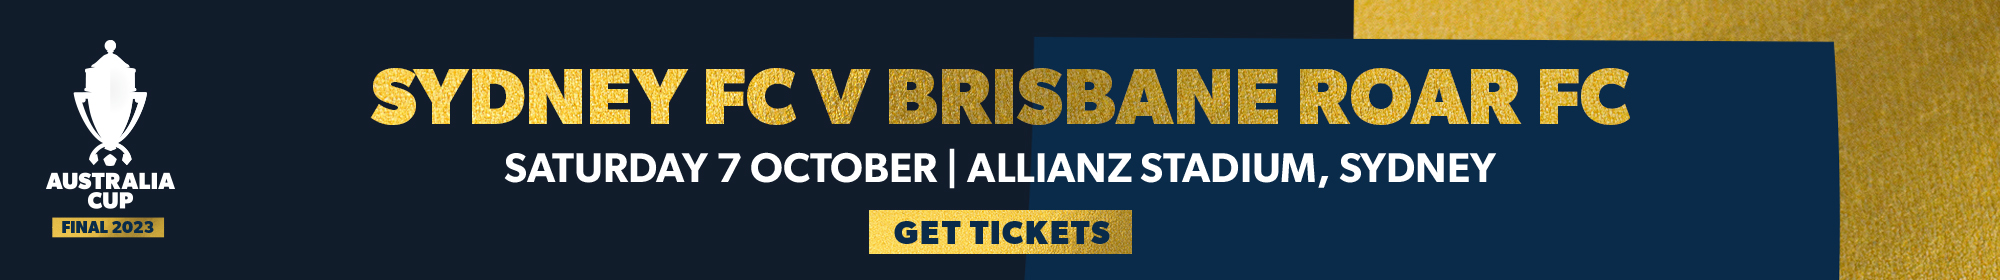 Australia Cup Final tickets banner